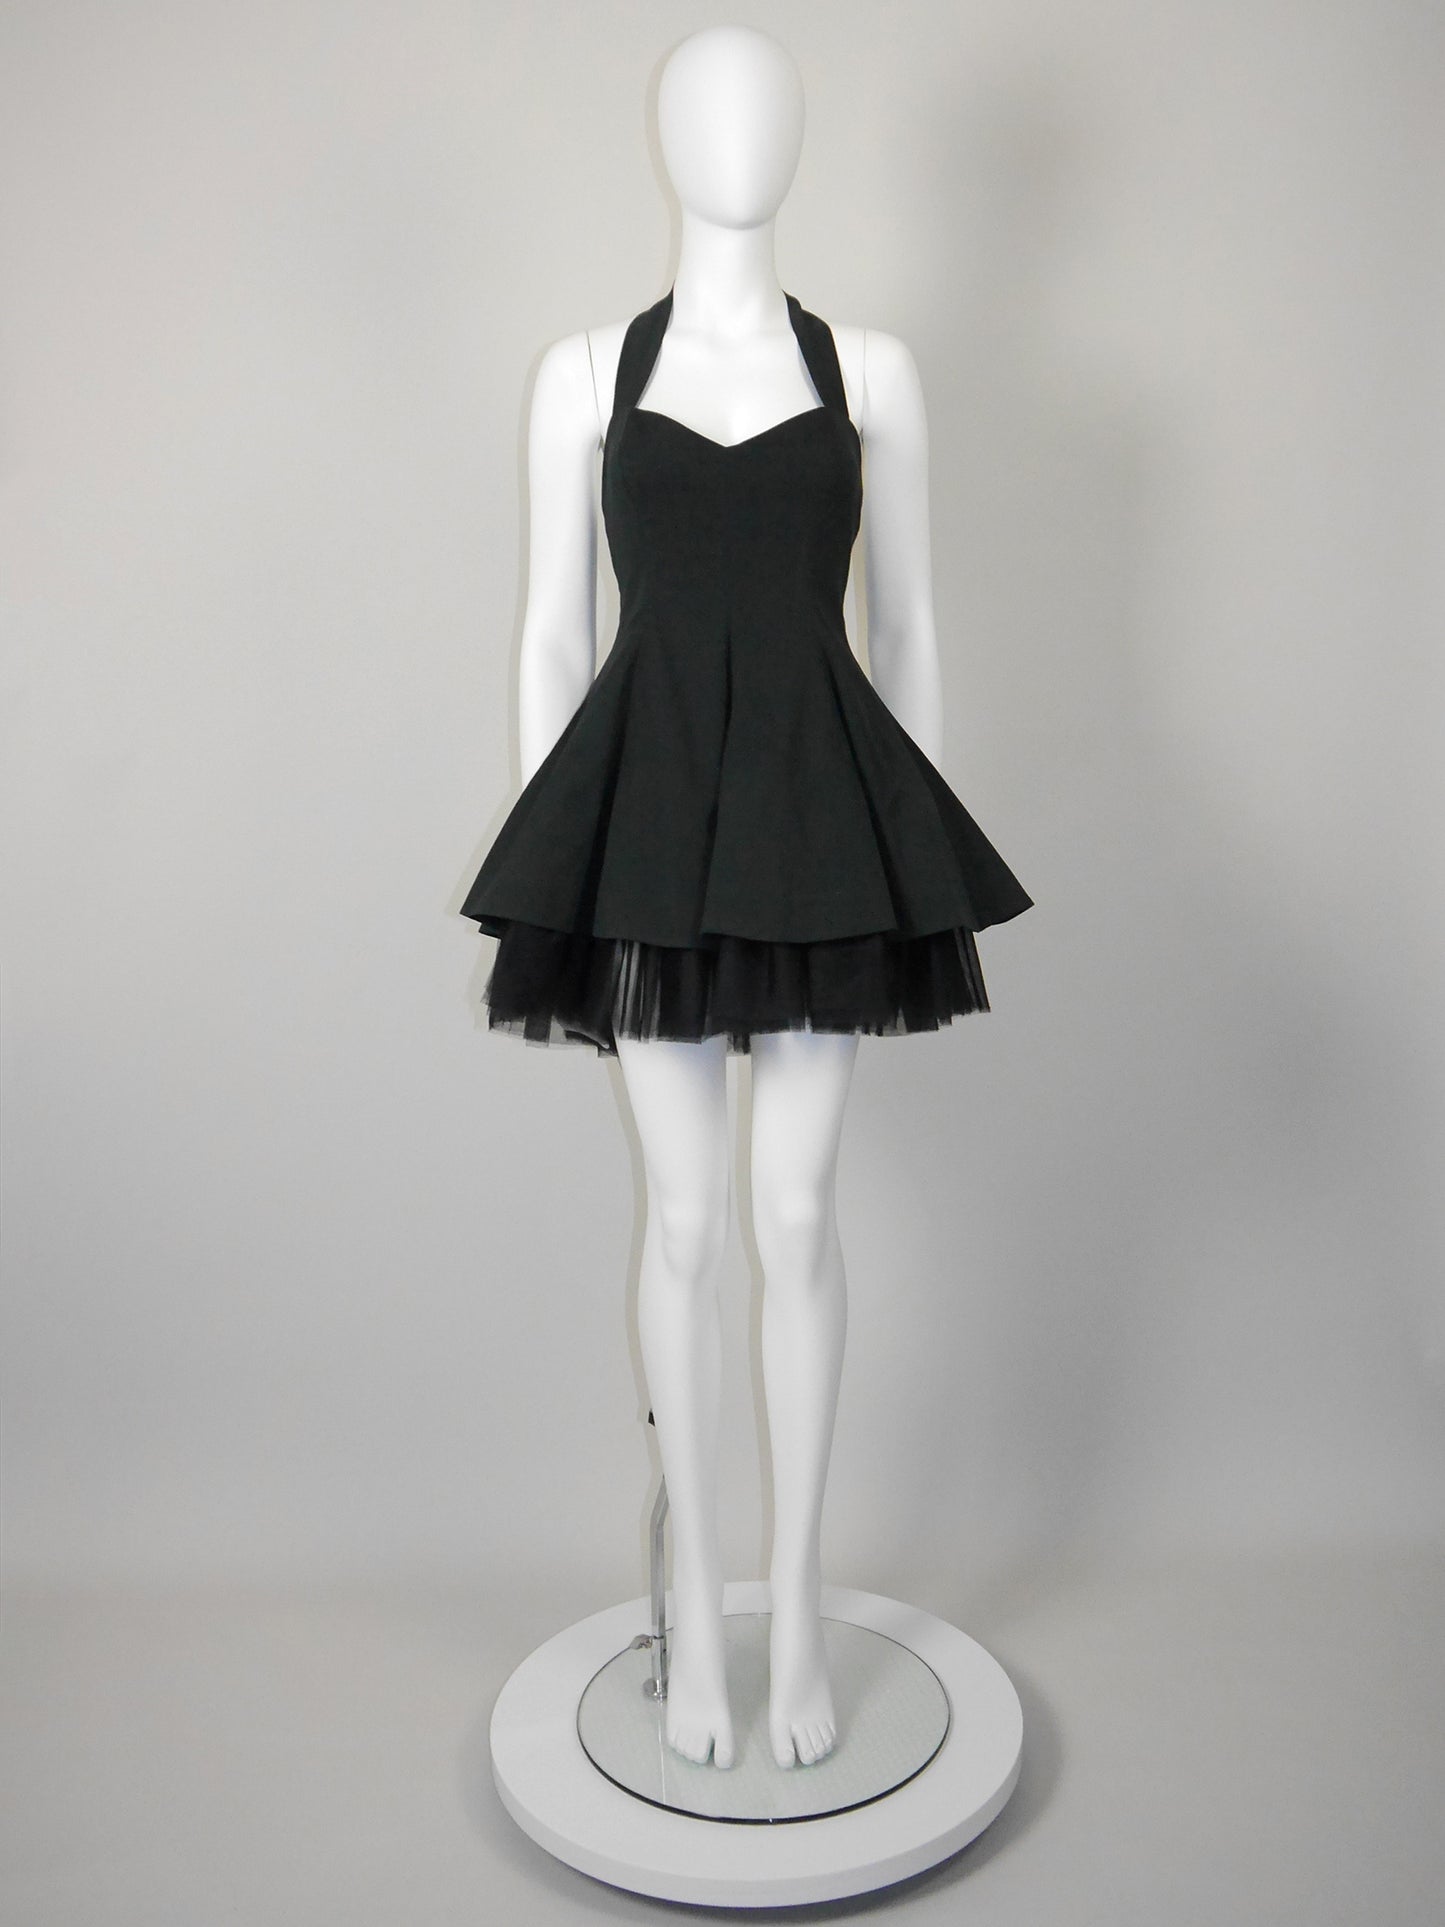 DOLCE & GABBANA Spring 1992 Vintage Backless Mini Dress w/ Tulle Skirt Runway Design Size M